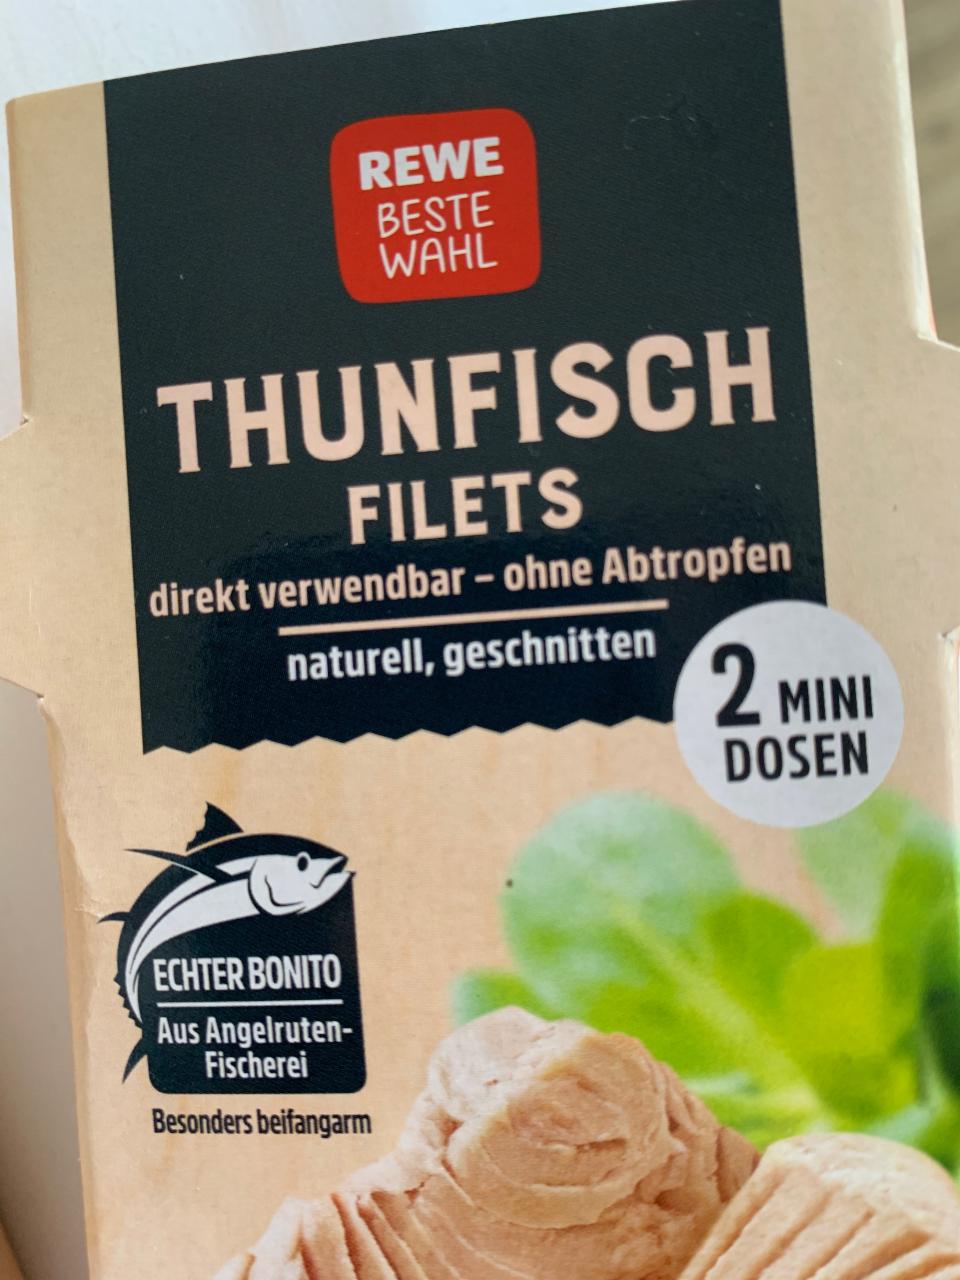 Fotografie - Thunfisch Filets Rewe beste wahl